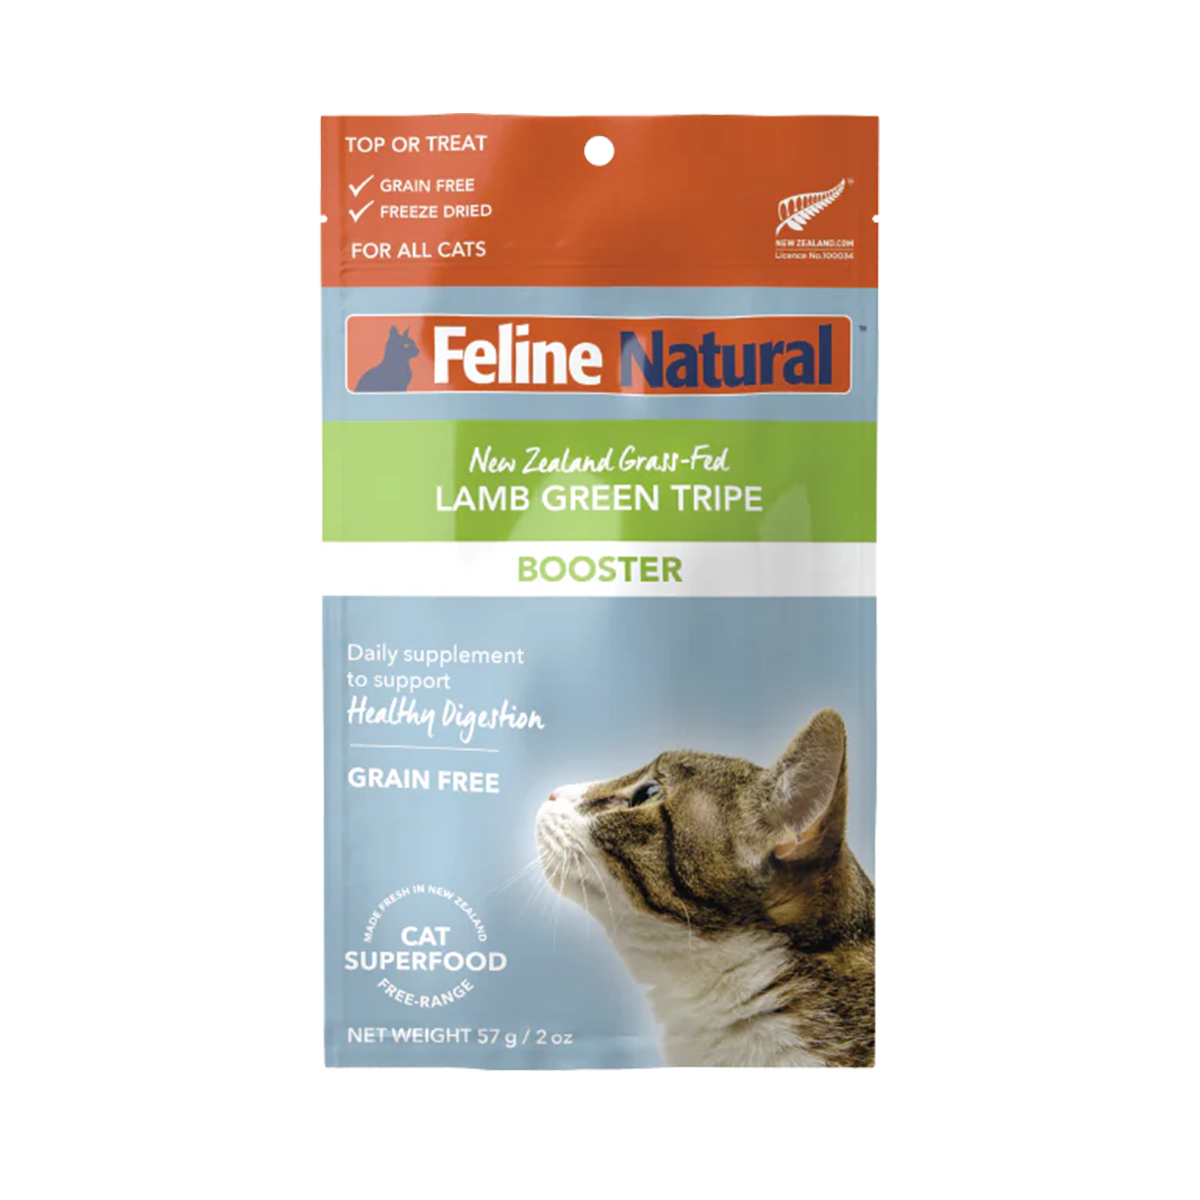 Feline Natural Freeze-Dried Cat Food Booster - Lamb Green Tripe